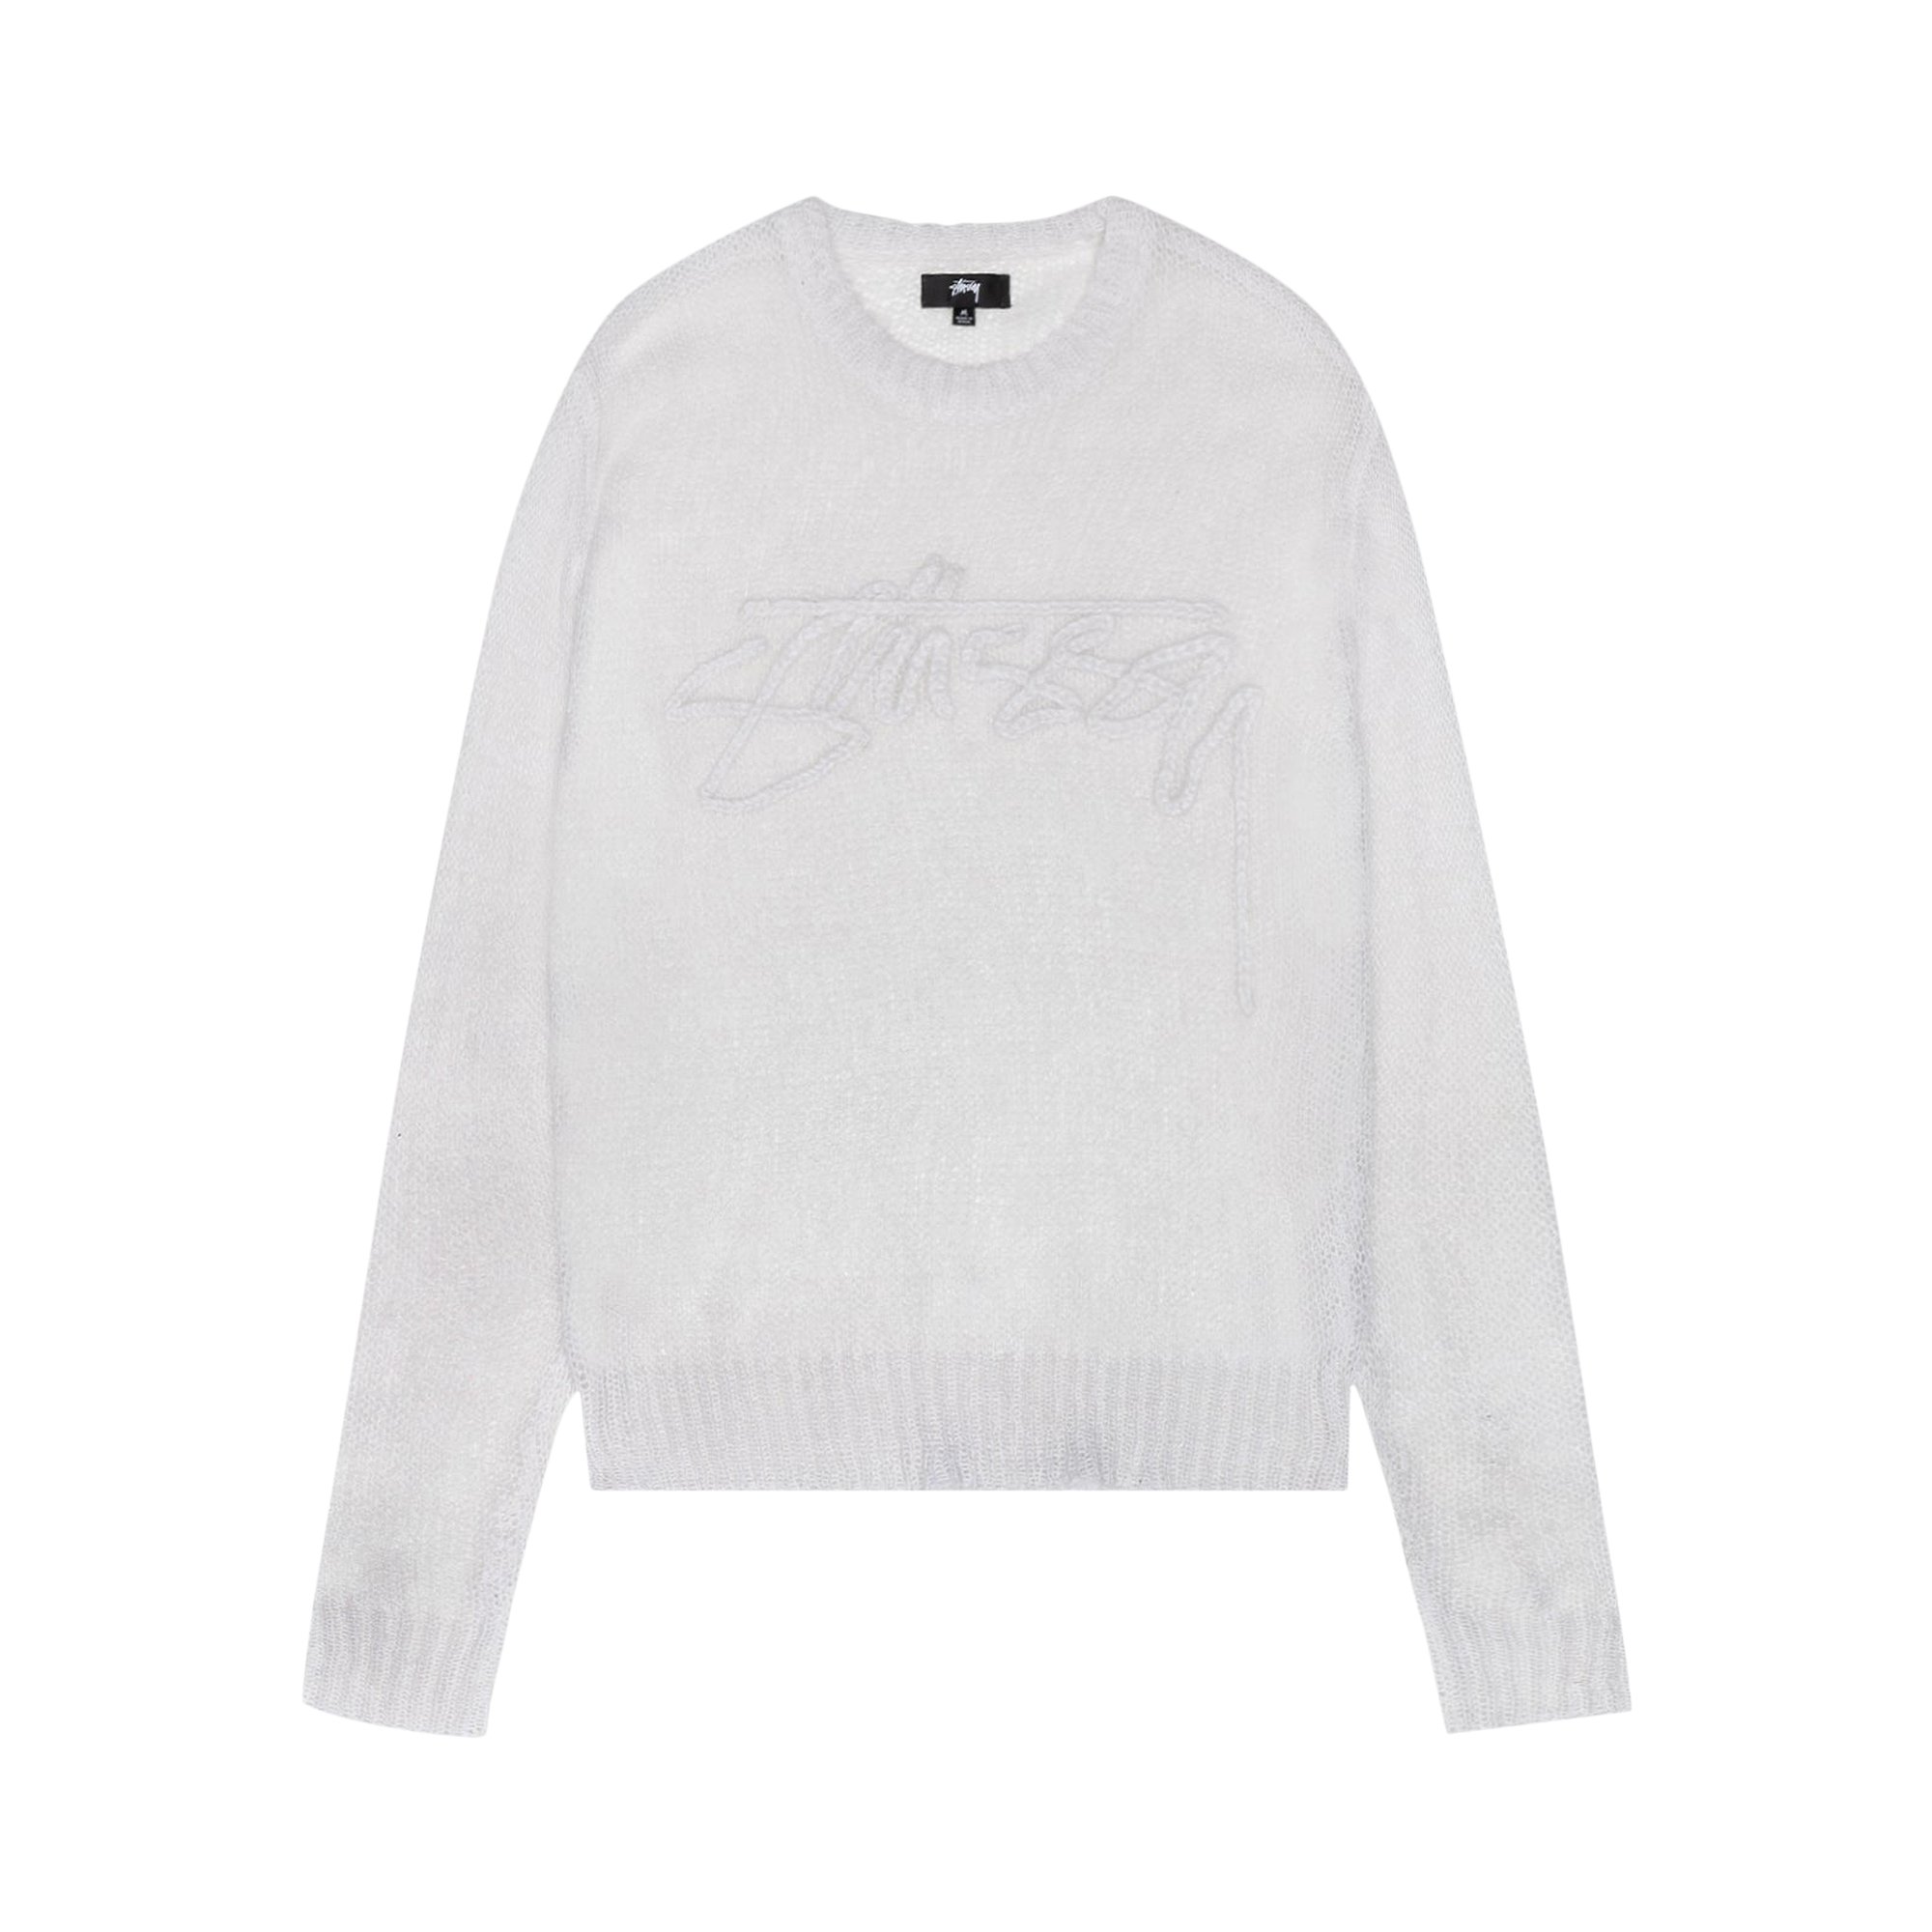 Buy Stussy Loose Knit Logo Sweater 'Bone' - 117180 BONE - White | GOAT